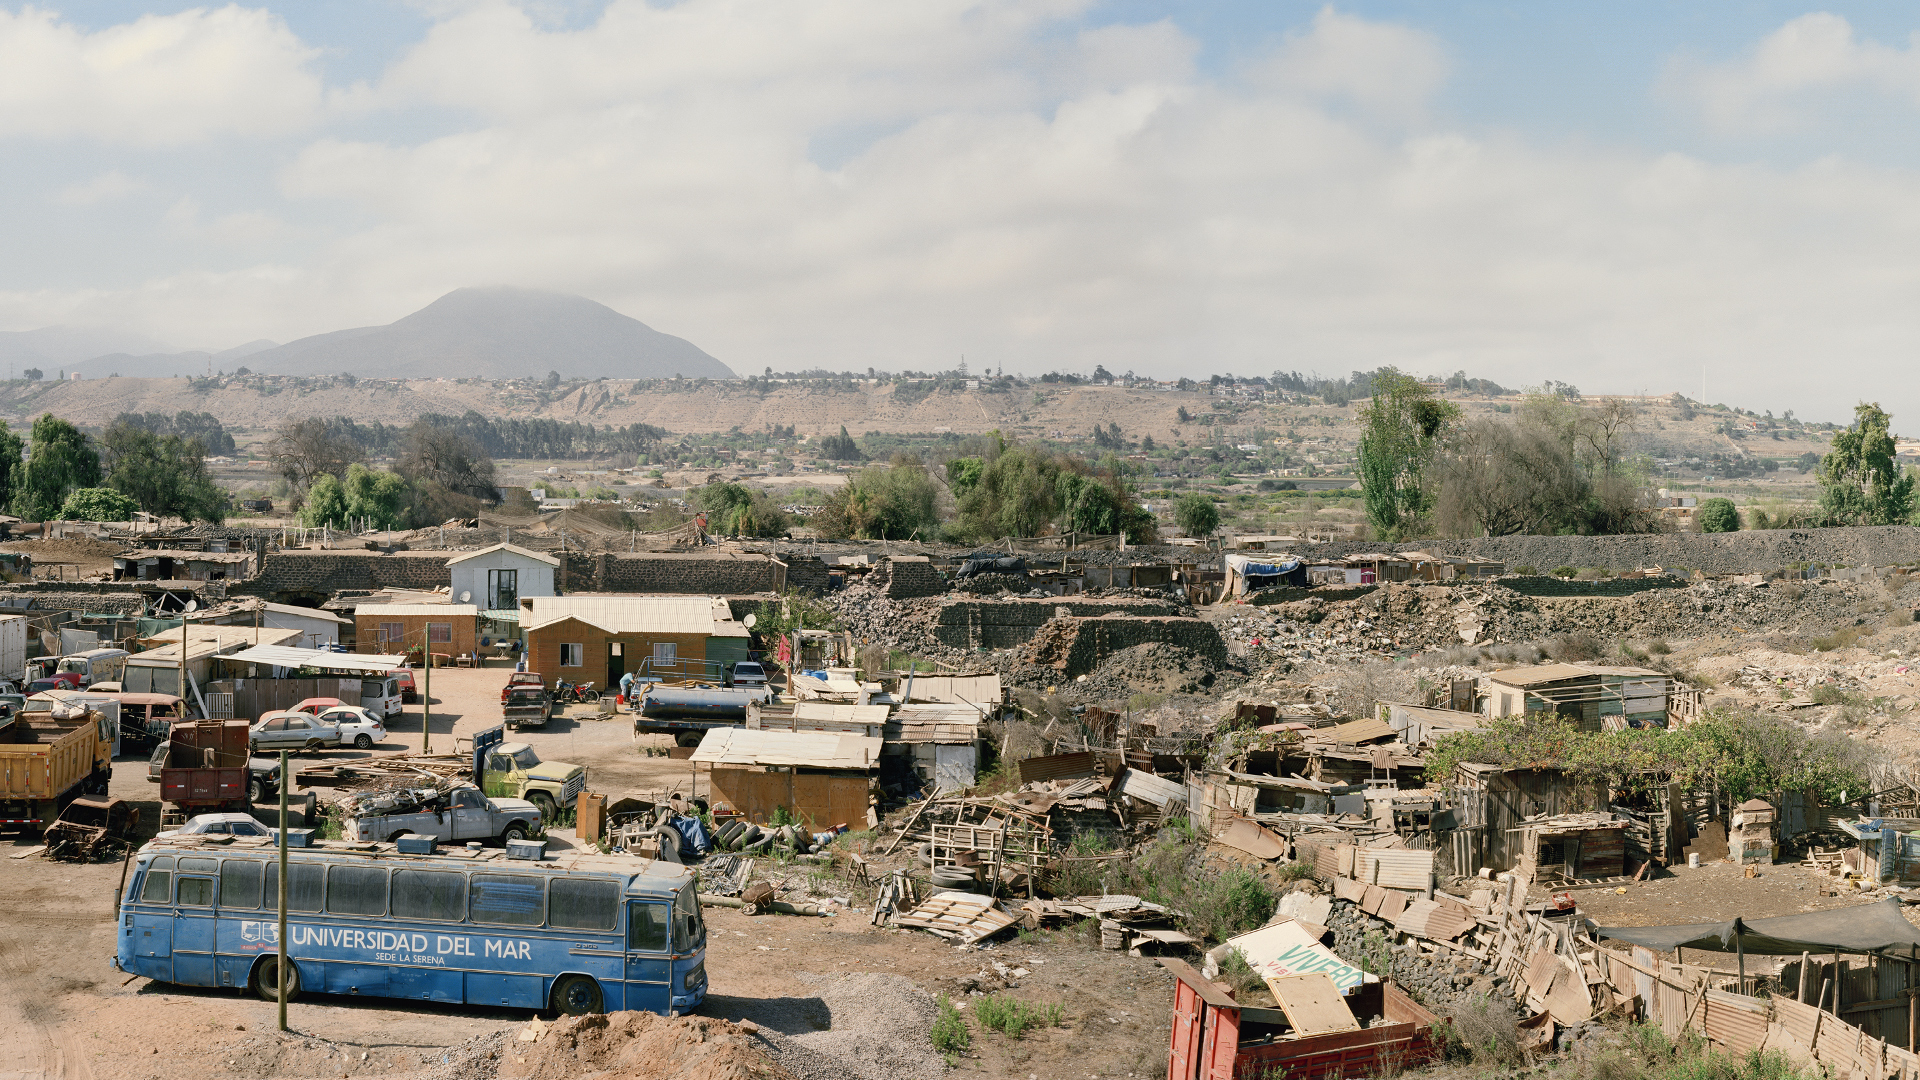 Panoramic view of a former copper smelting site. Las Compañías, La Serena commune, Chile 2014